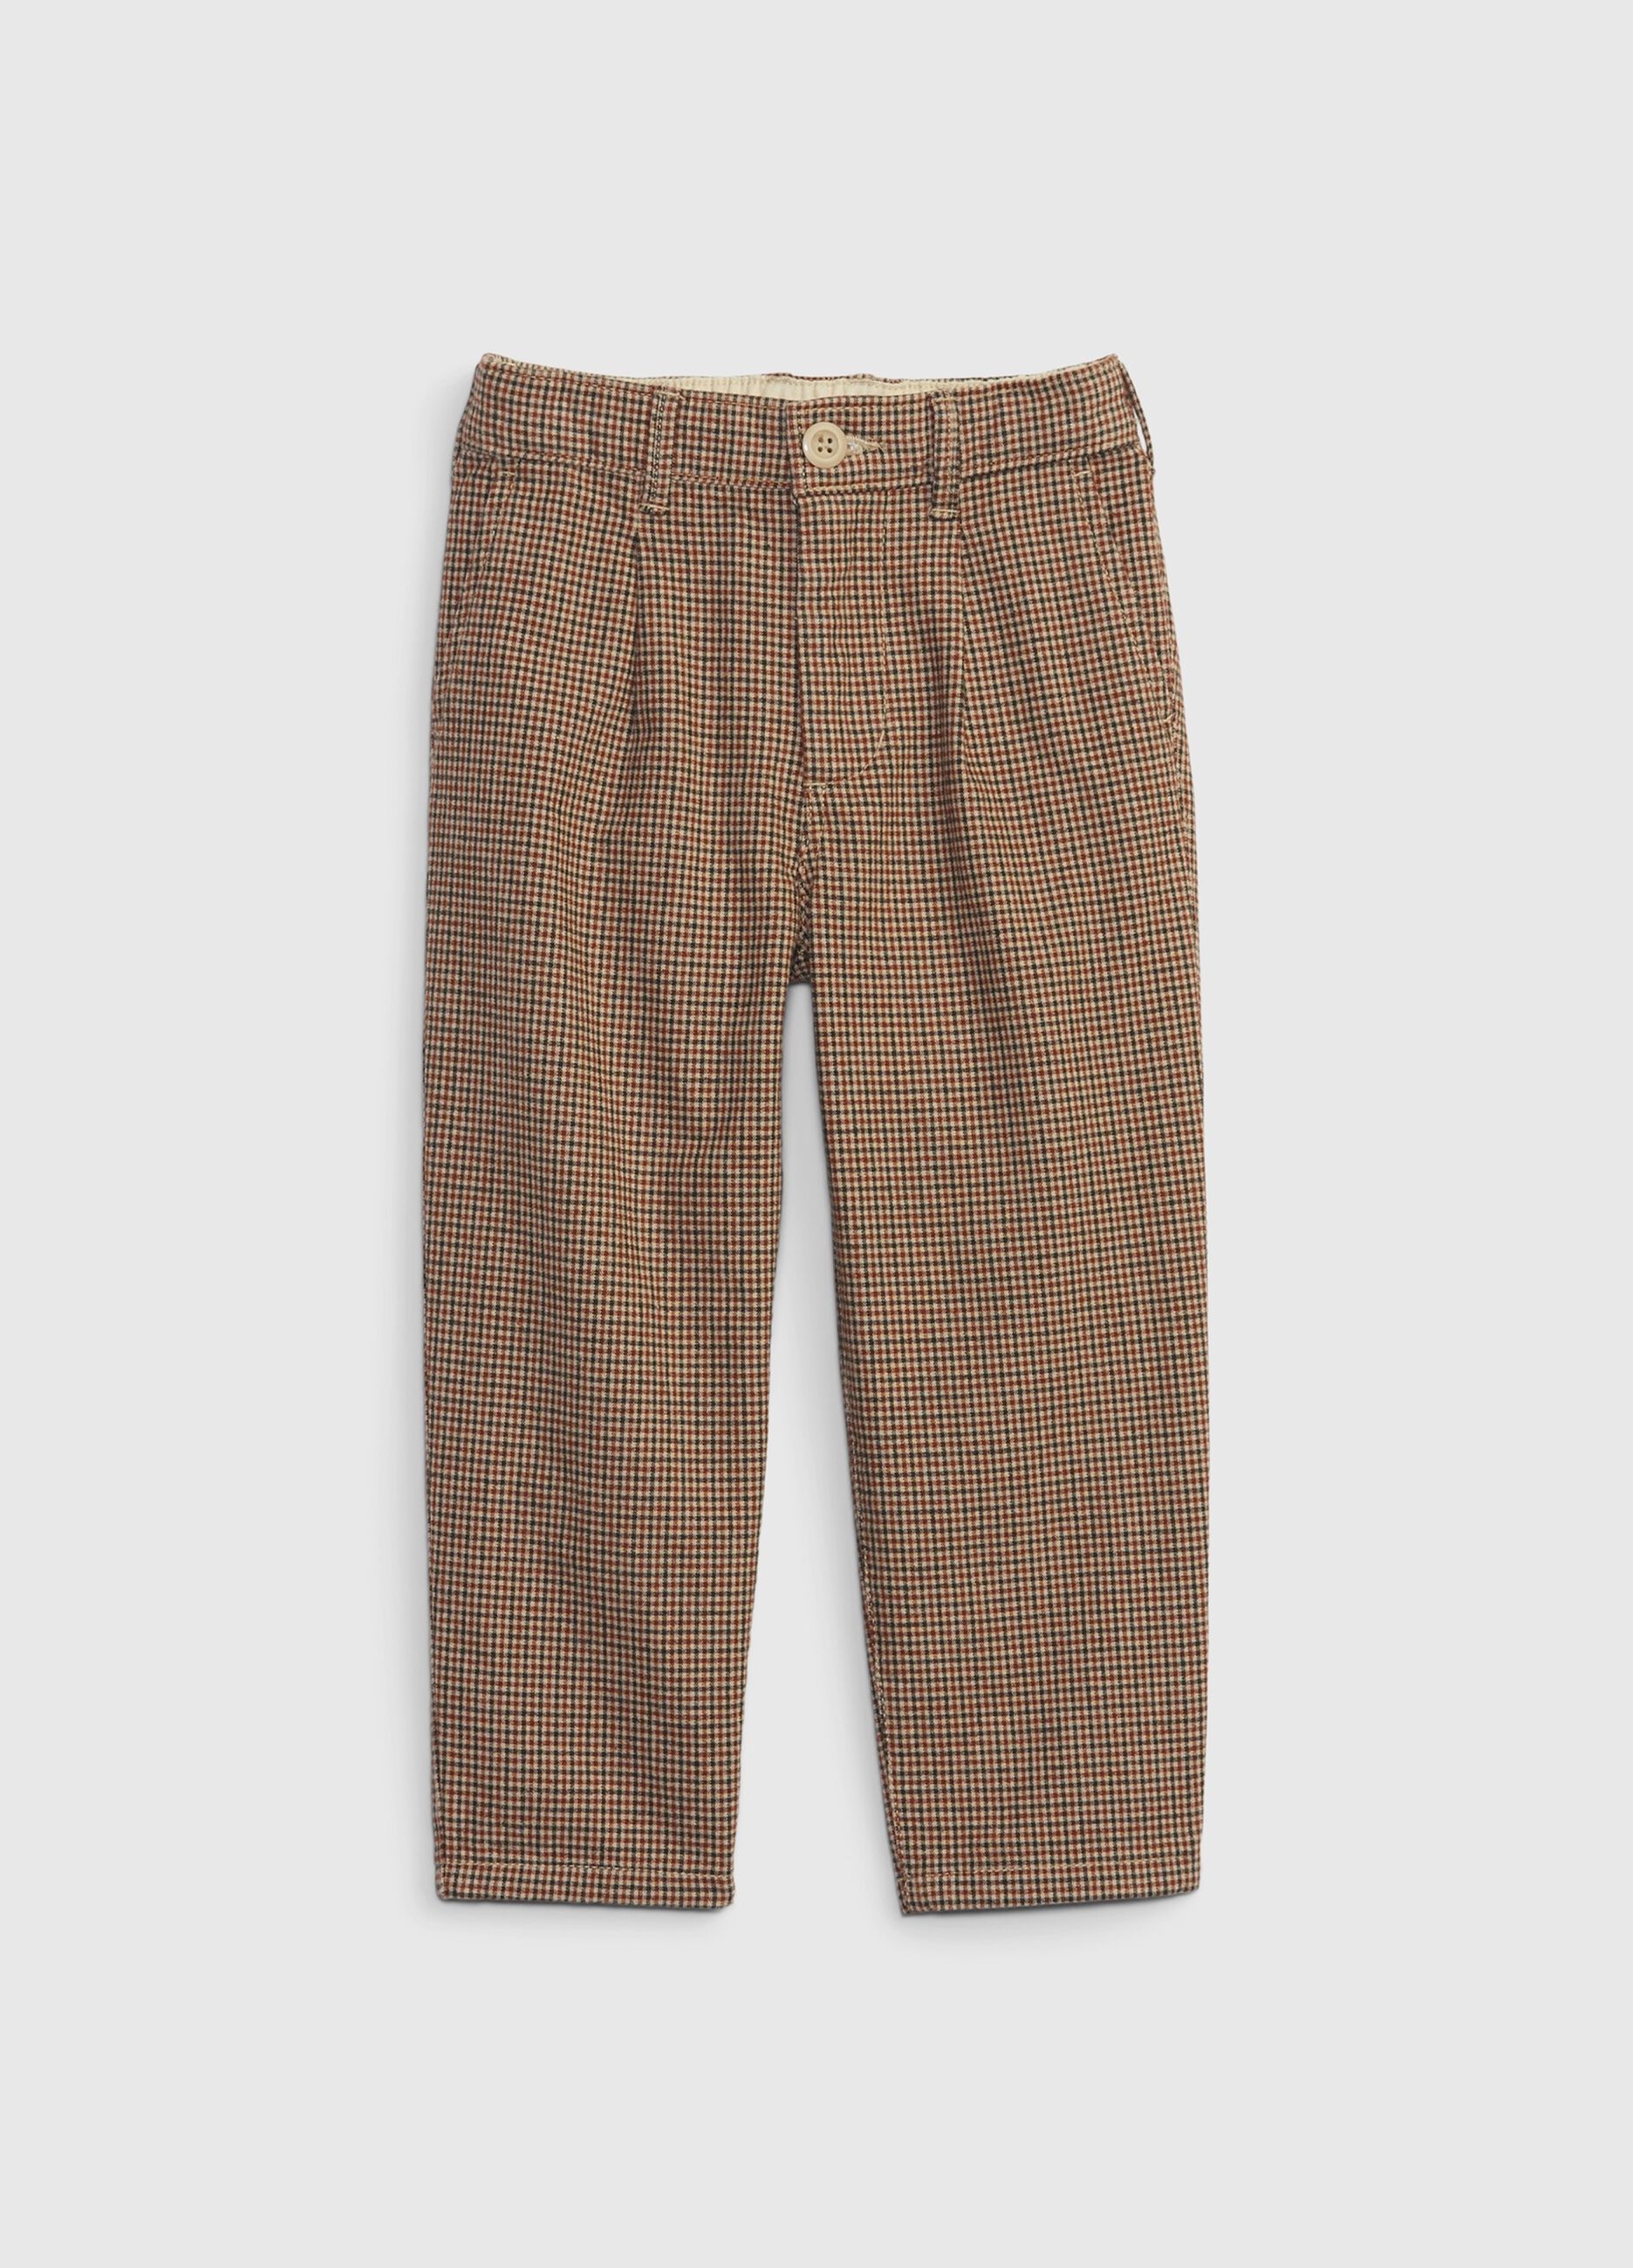 Chino trousers in tartan cotton